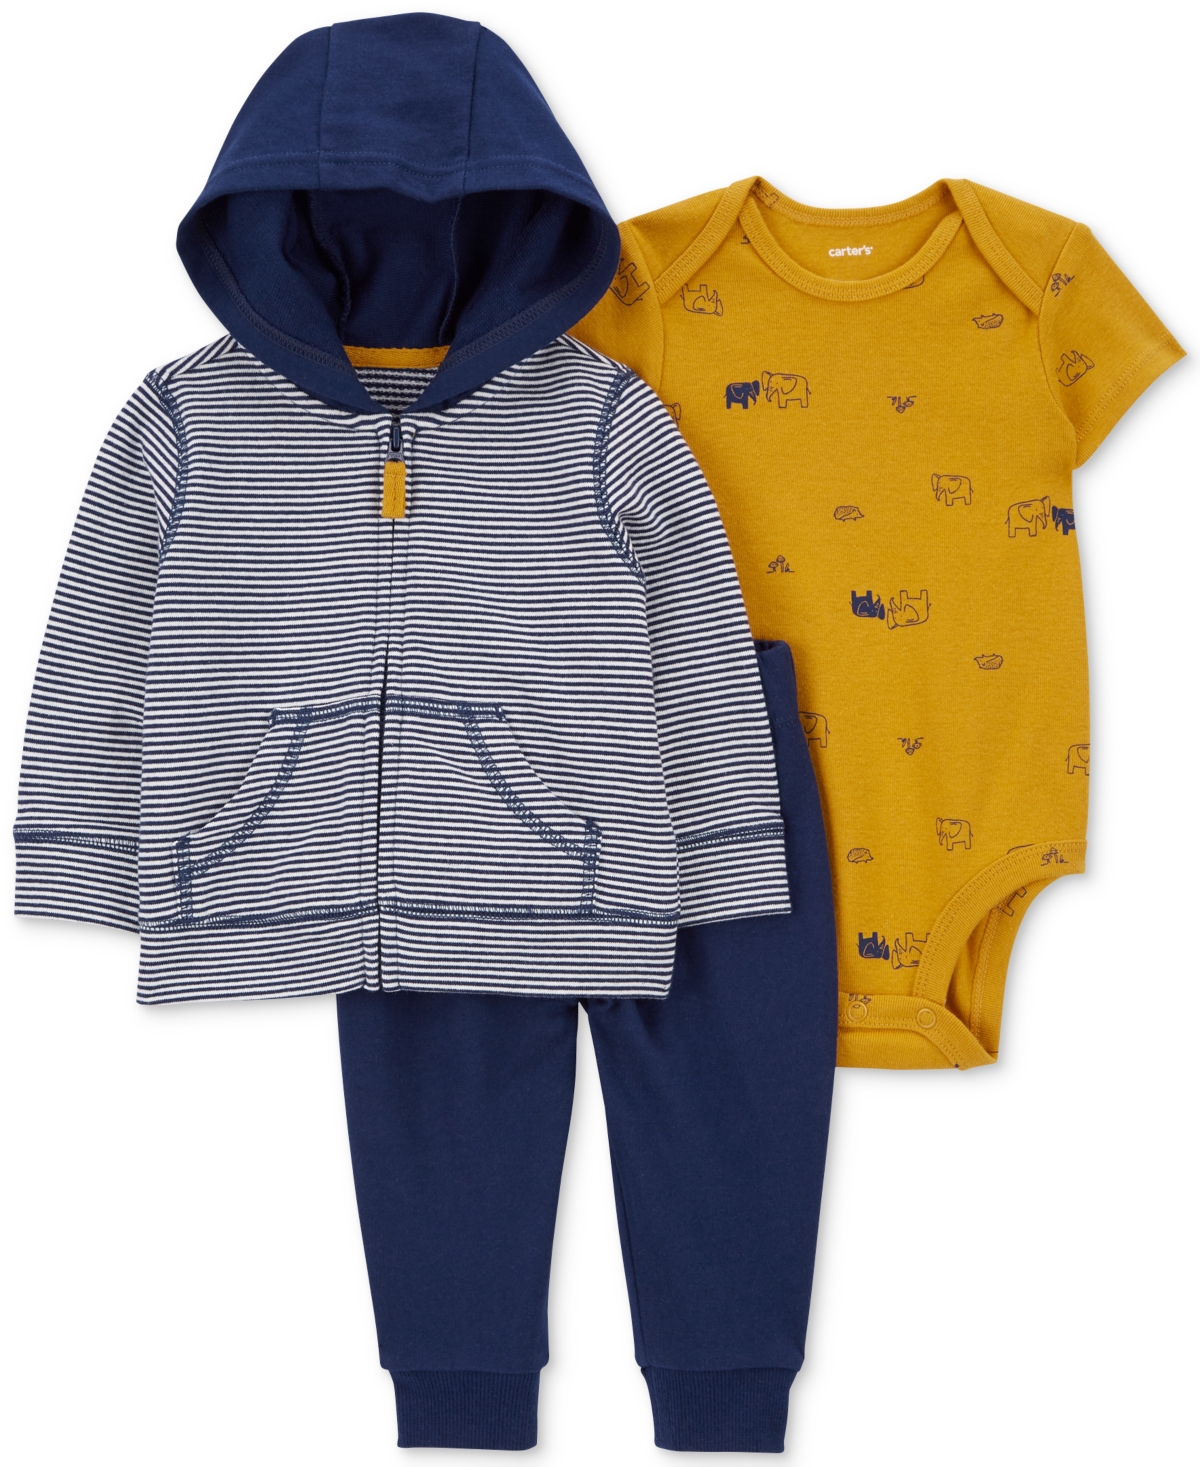 Carter's Baby Boys Cotton Striped Little Jacket, Elephant-print Bodysuit And Pants, 3 Piece Set In Multi